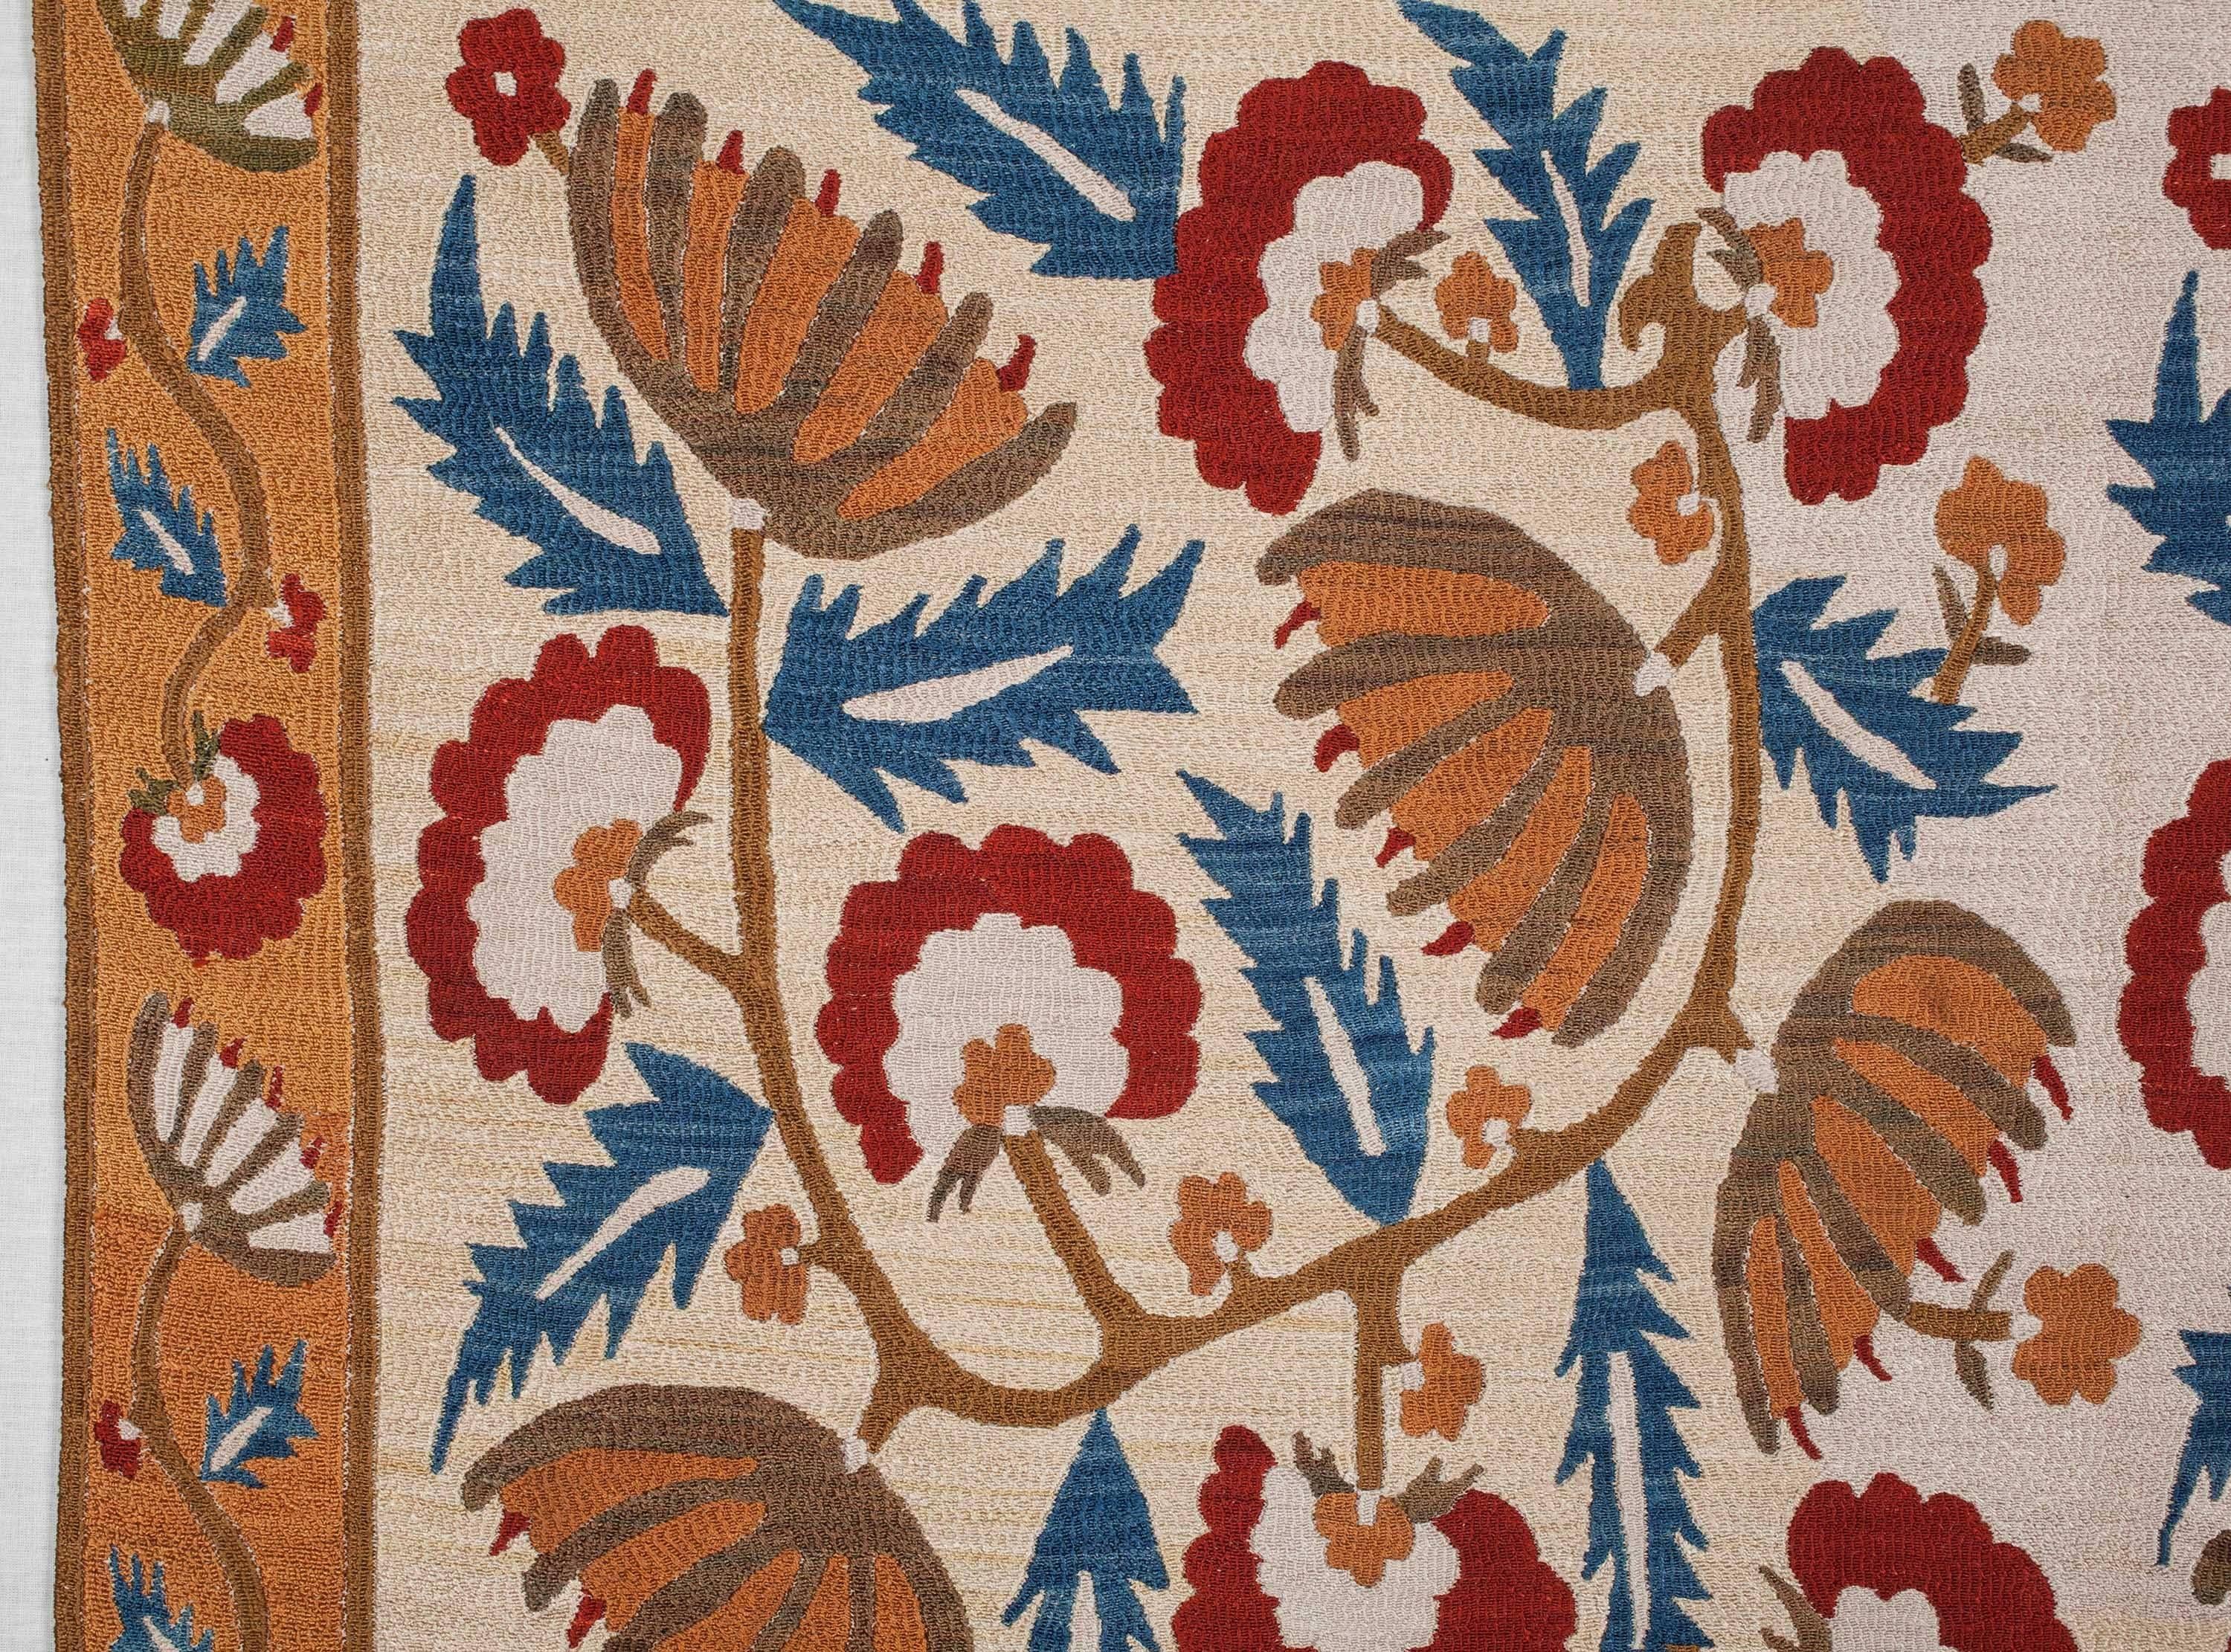 Armenian Contemporary Silk Embroidery from Armenia For Sale